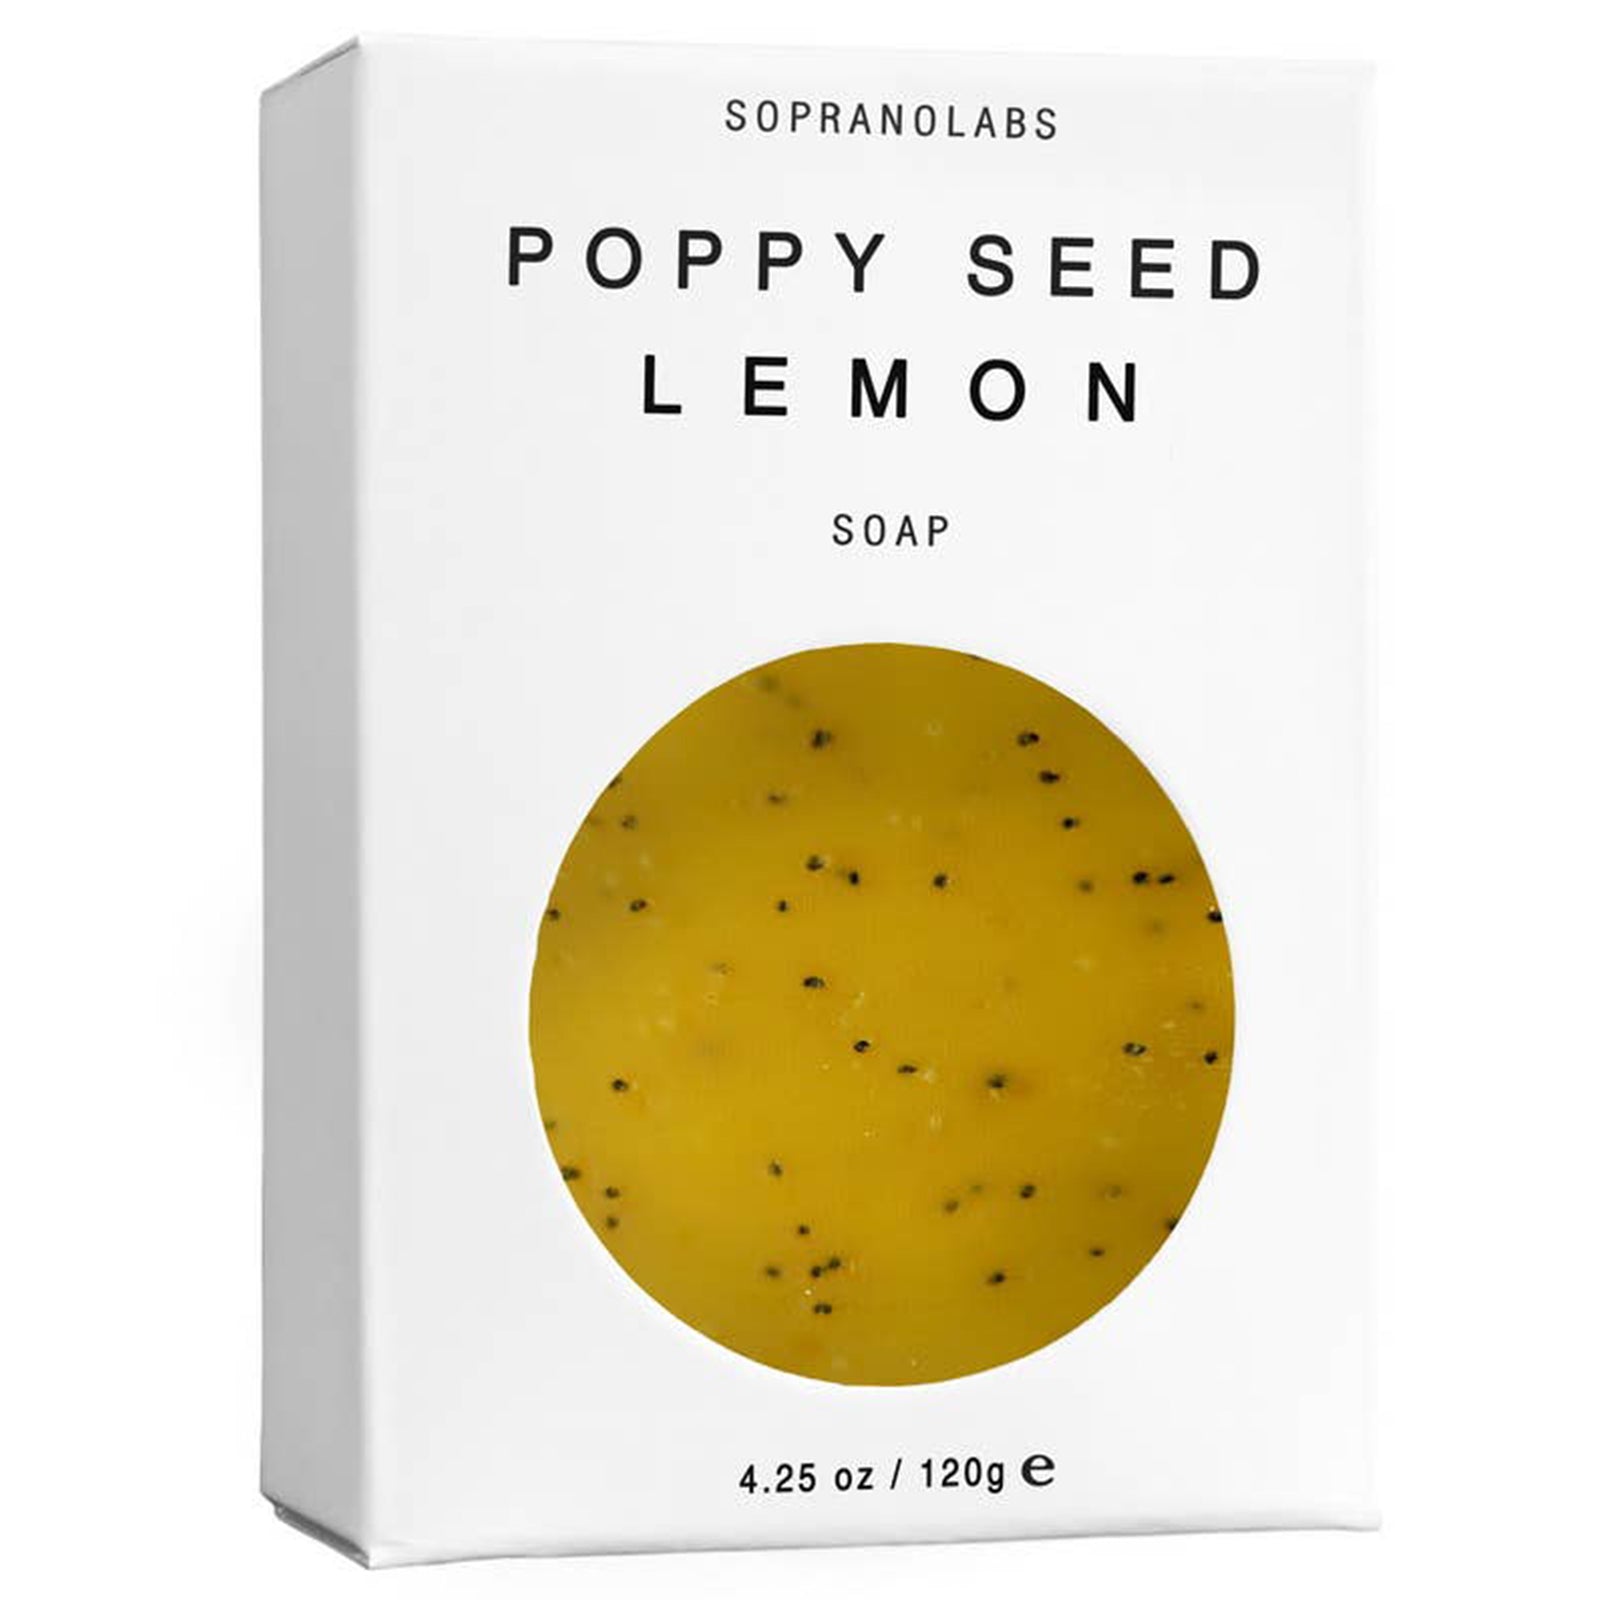 Soprano labs poppy seed lemon soap